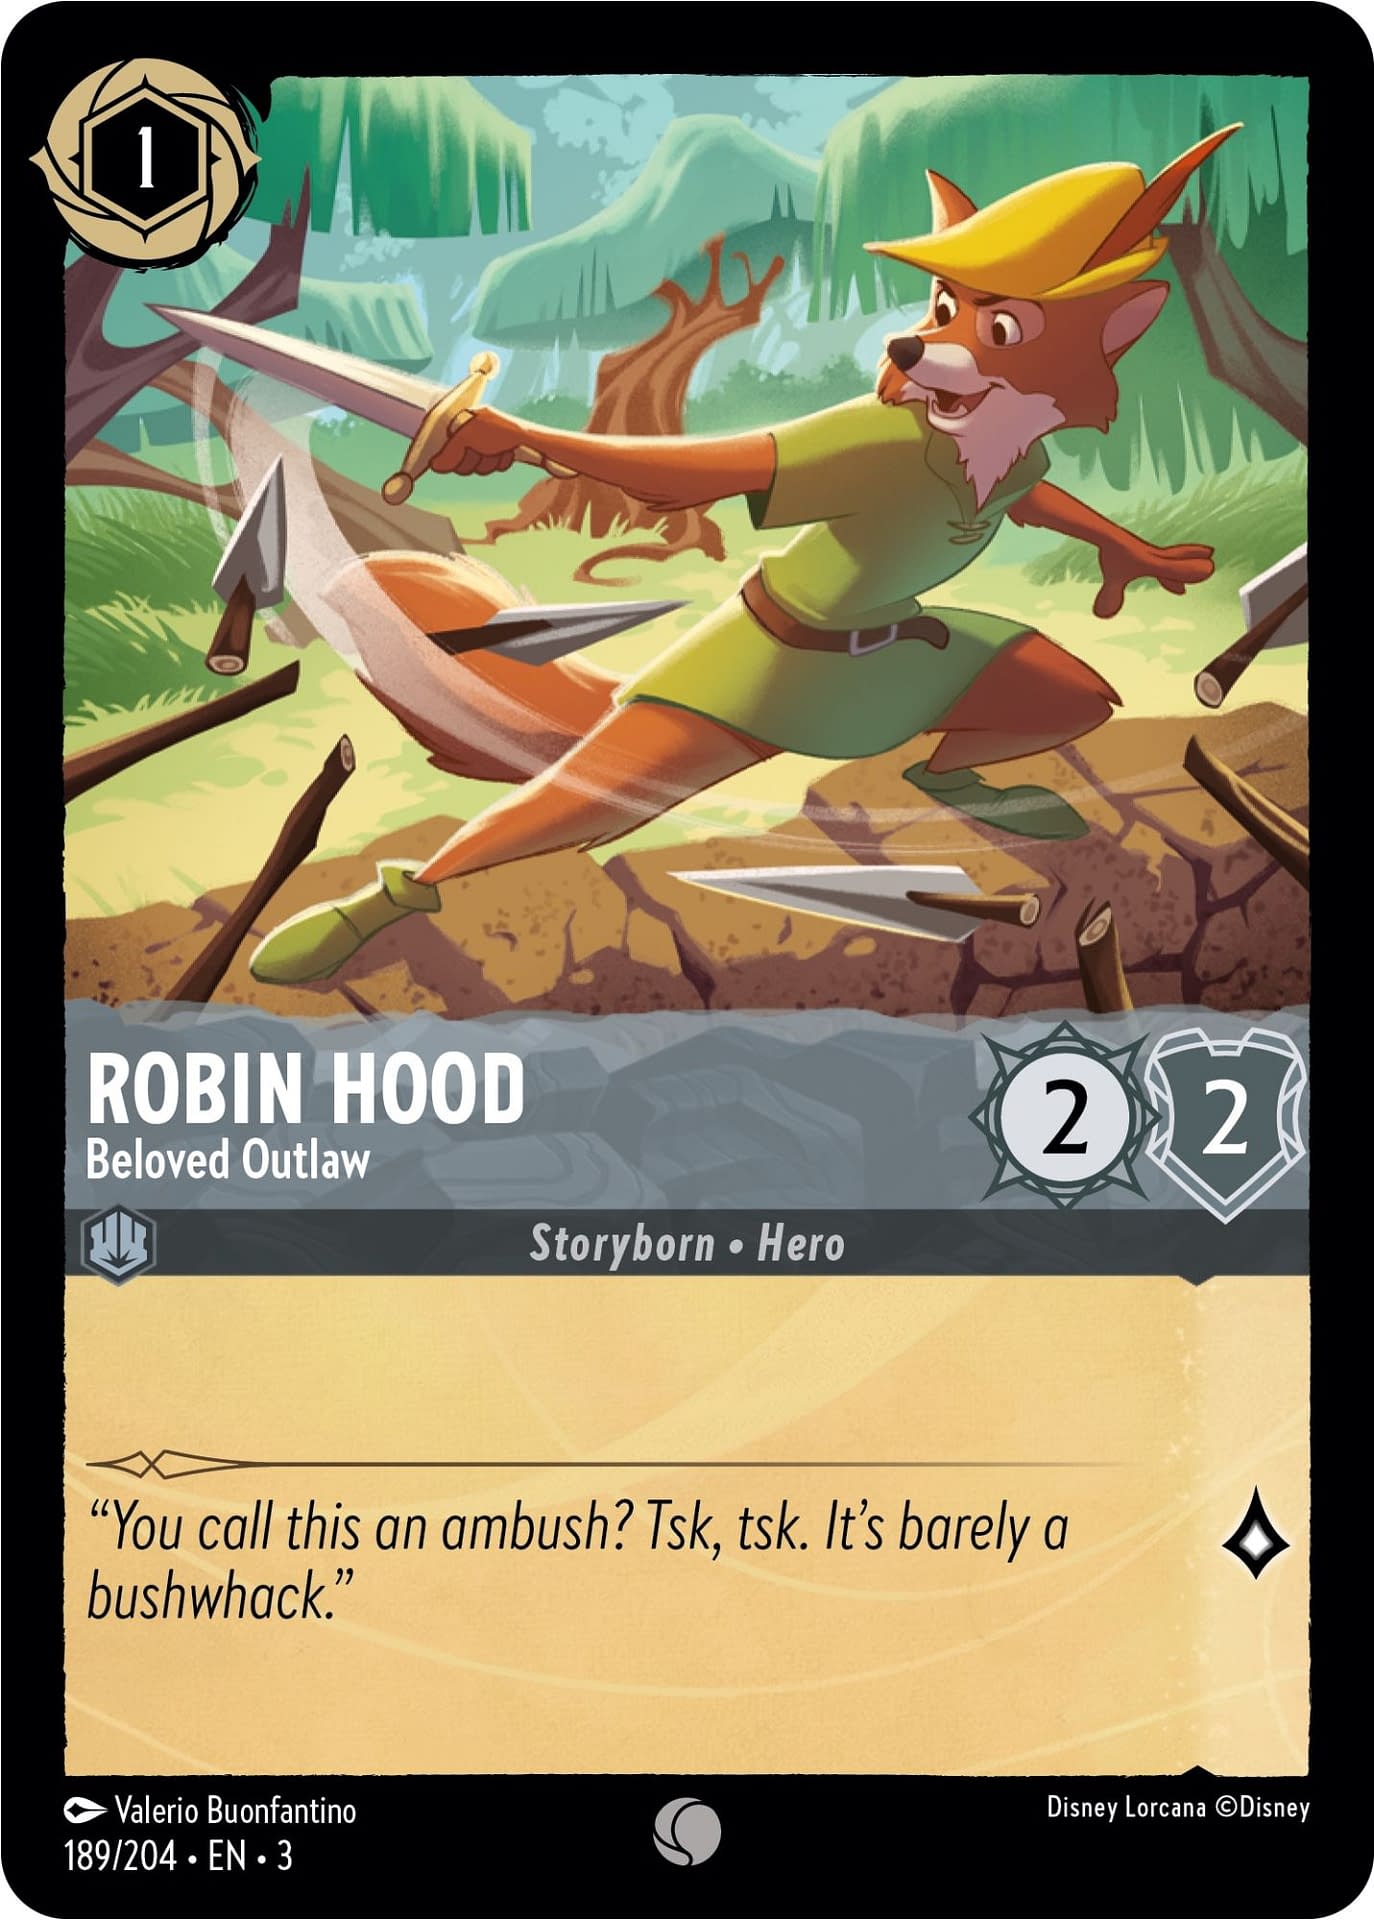 Disney's Robin Hood Enters the Inklands for Disney Lorcana (Exclusive)